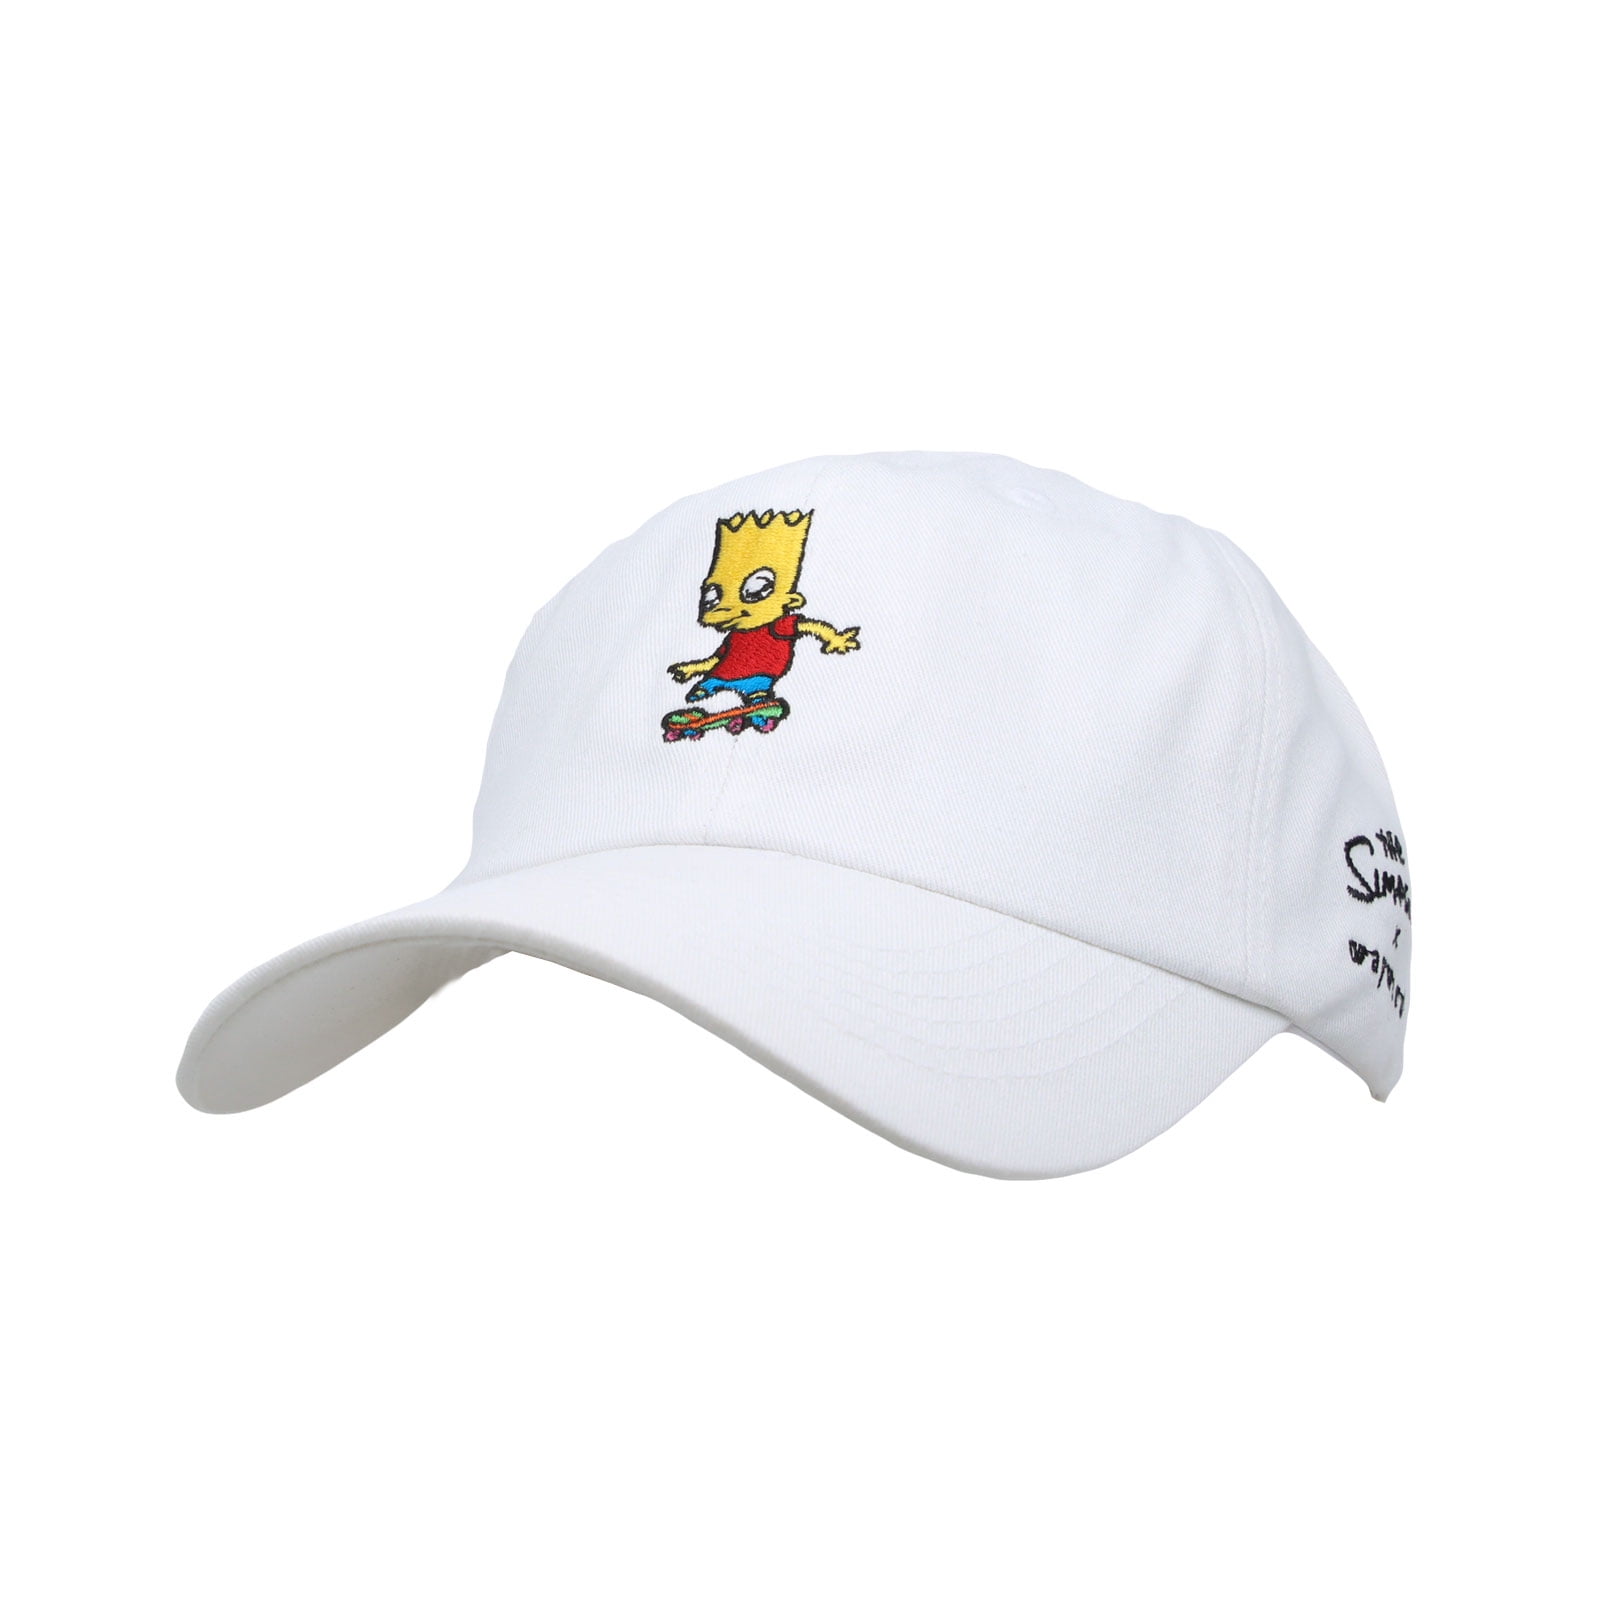 HS02.The Simpsons Bart Simpson Baseball Cap Hat Adjustable Unisex Men Women 